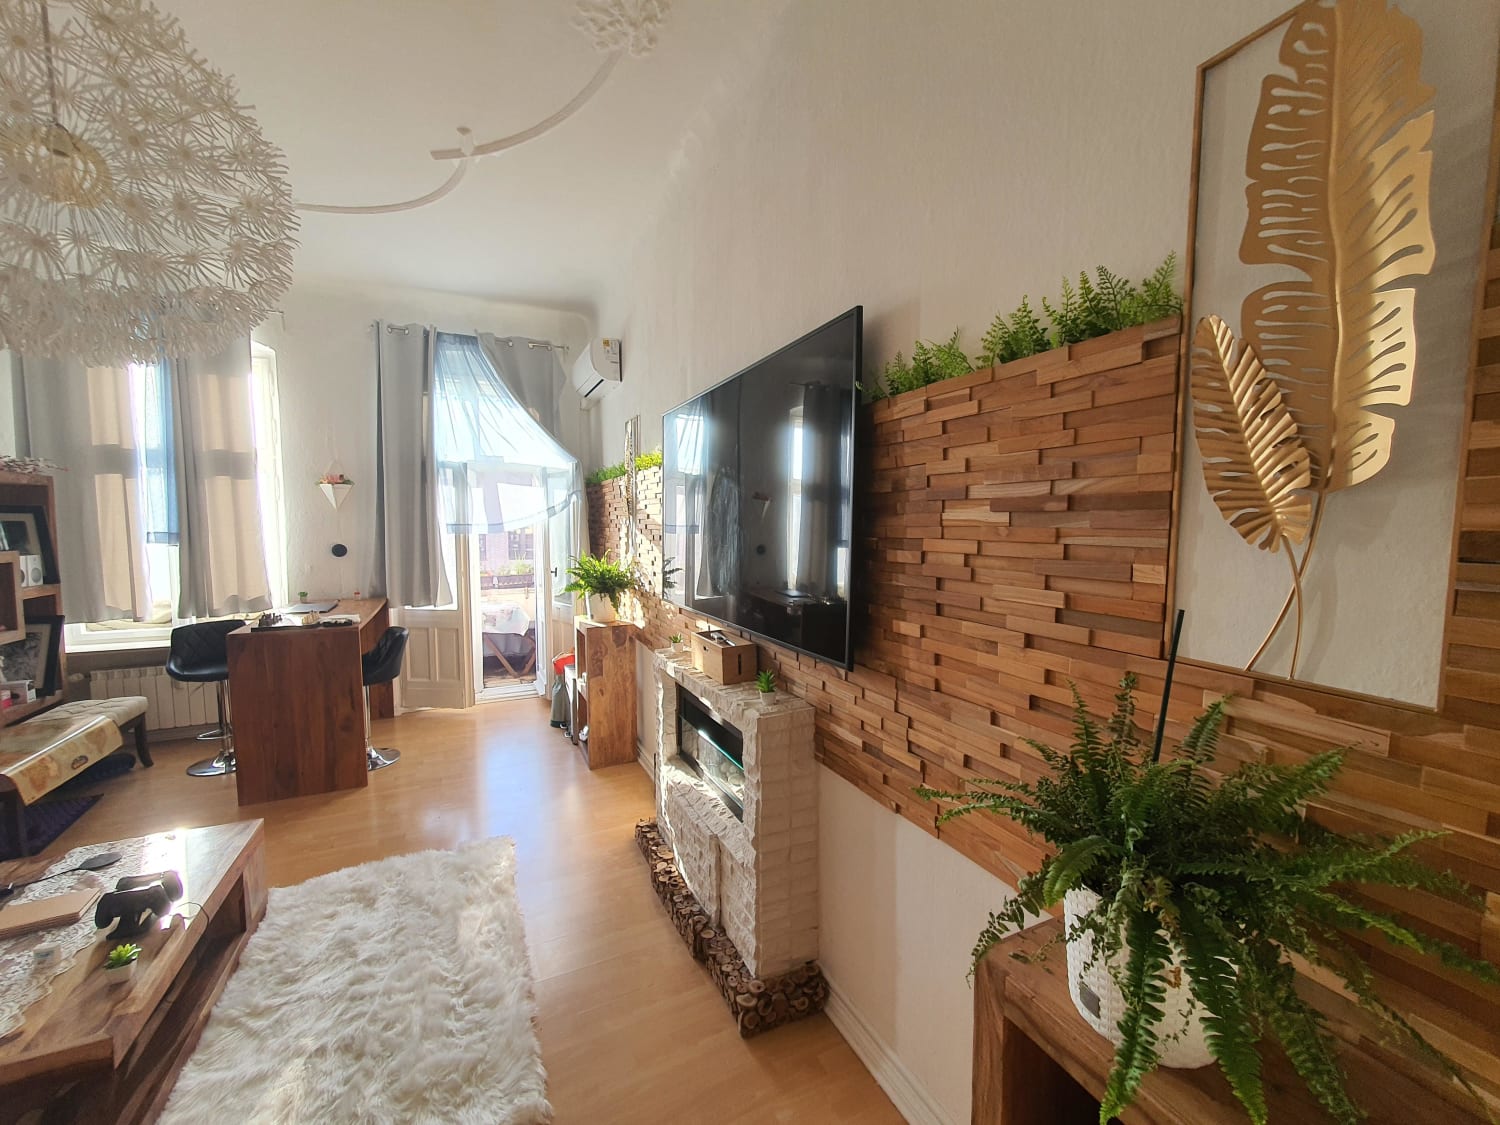 My handcrafted living room in Berlin